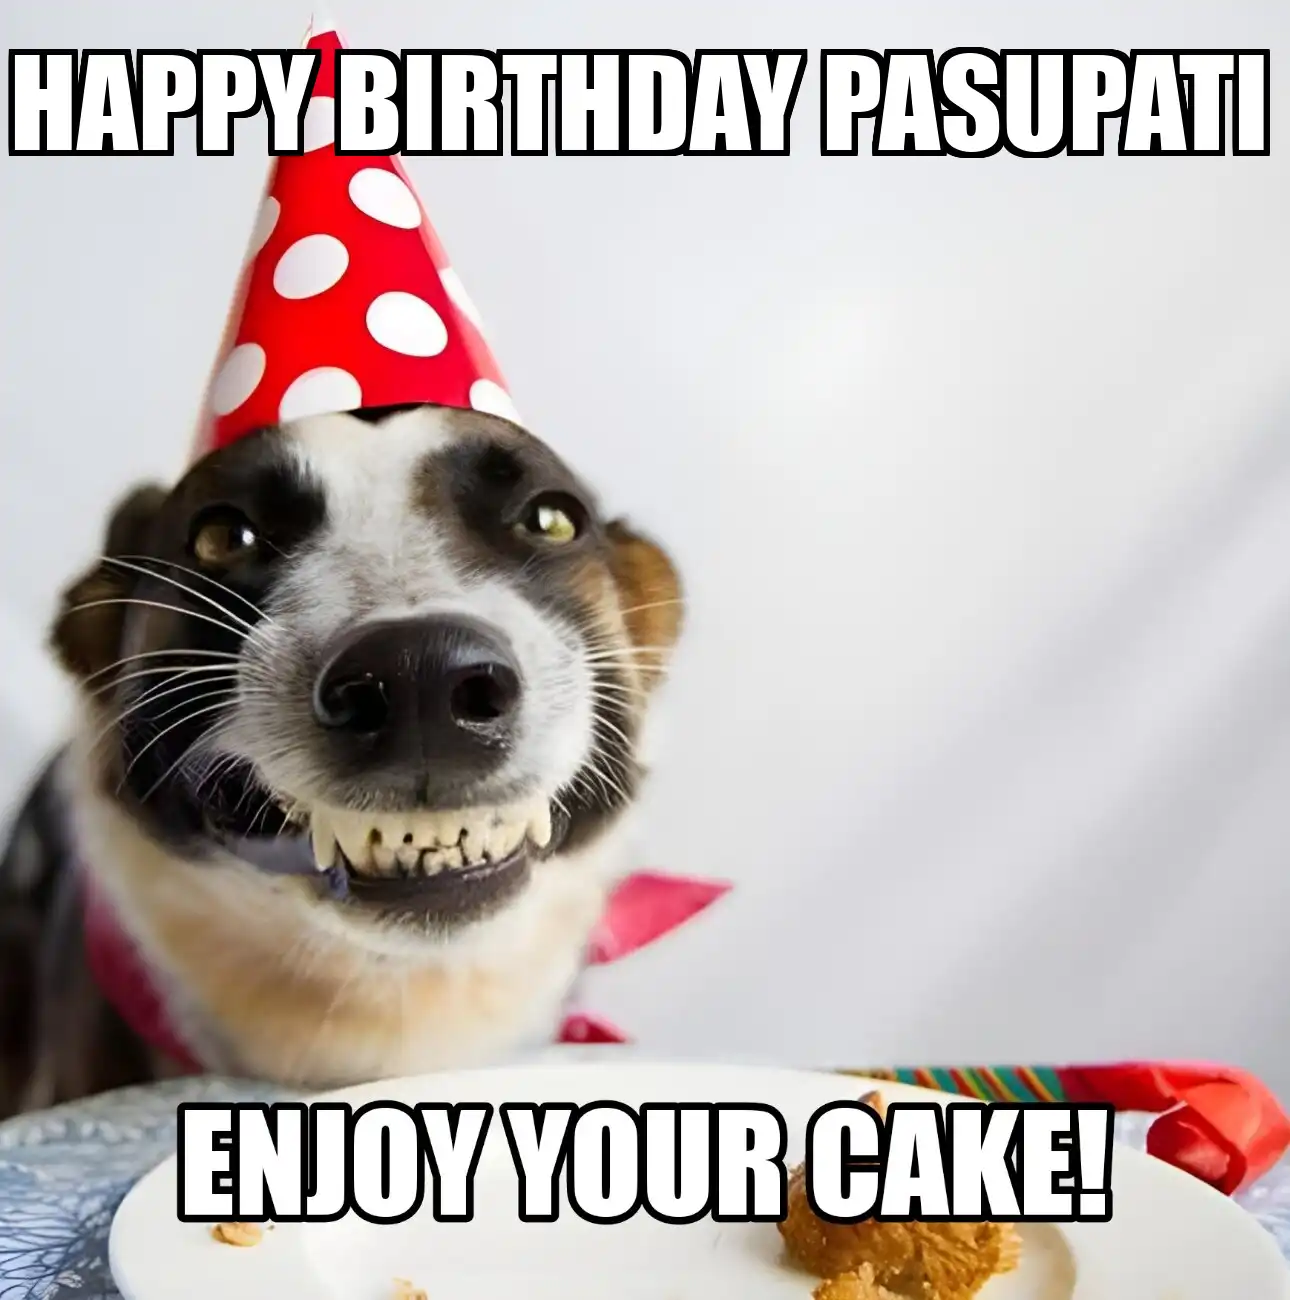 Happy Birthday Pasupati Enjoy Your Cake Dog Meme